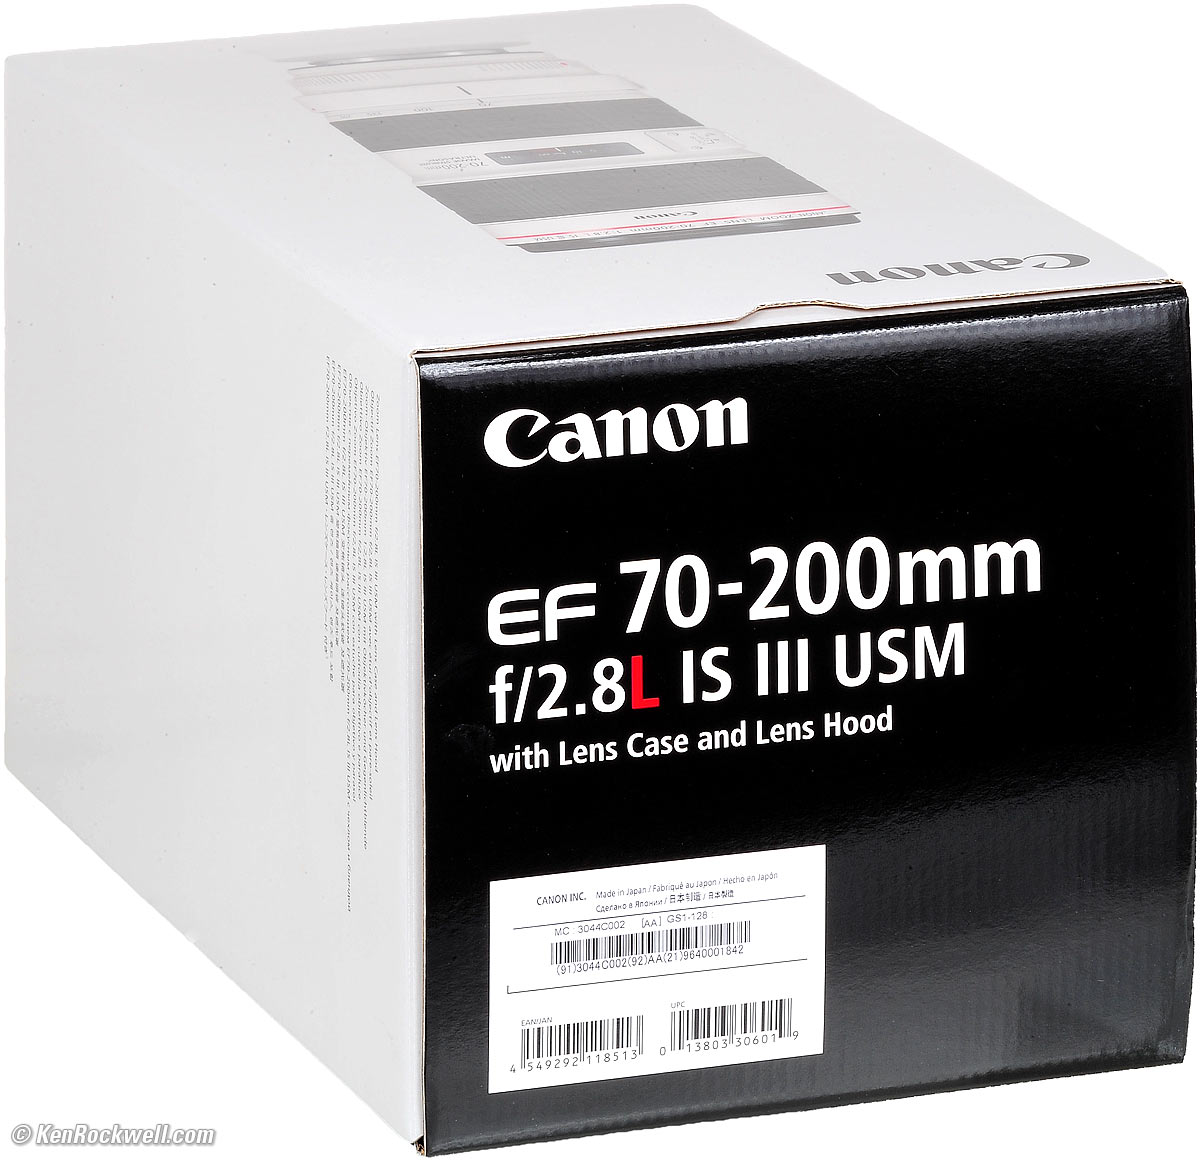 Schockierender Sonderpreis Canon 70-200mm IS Review f/2.8 L III